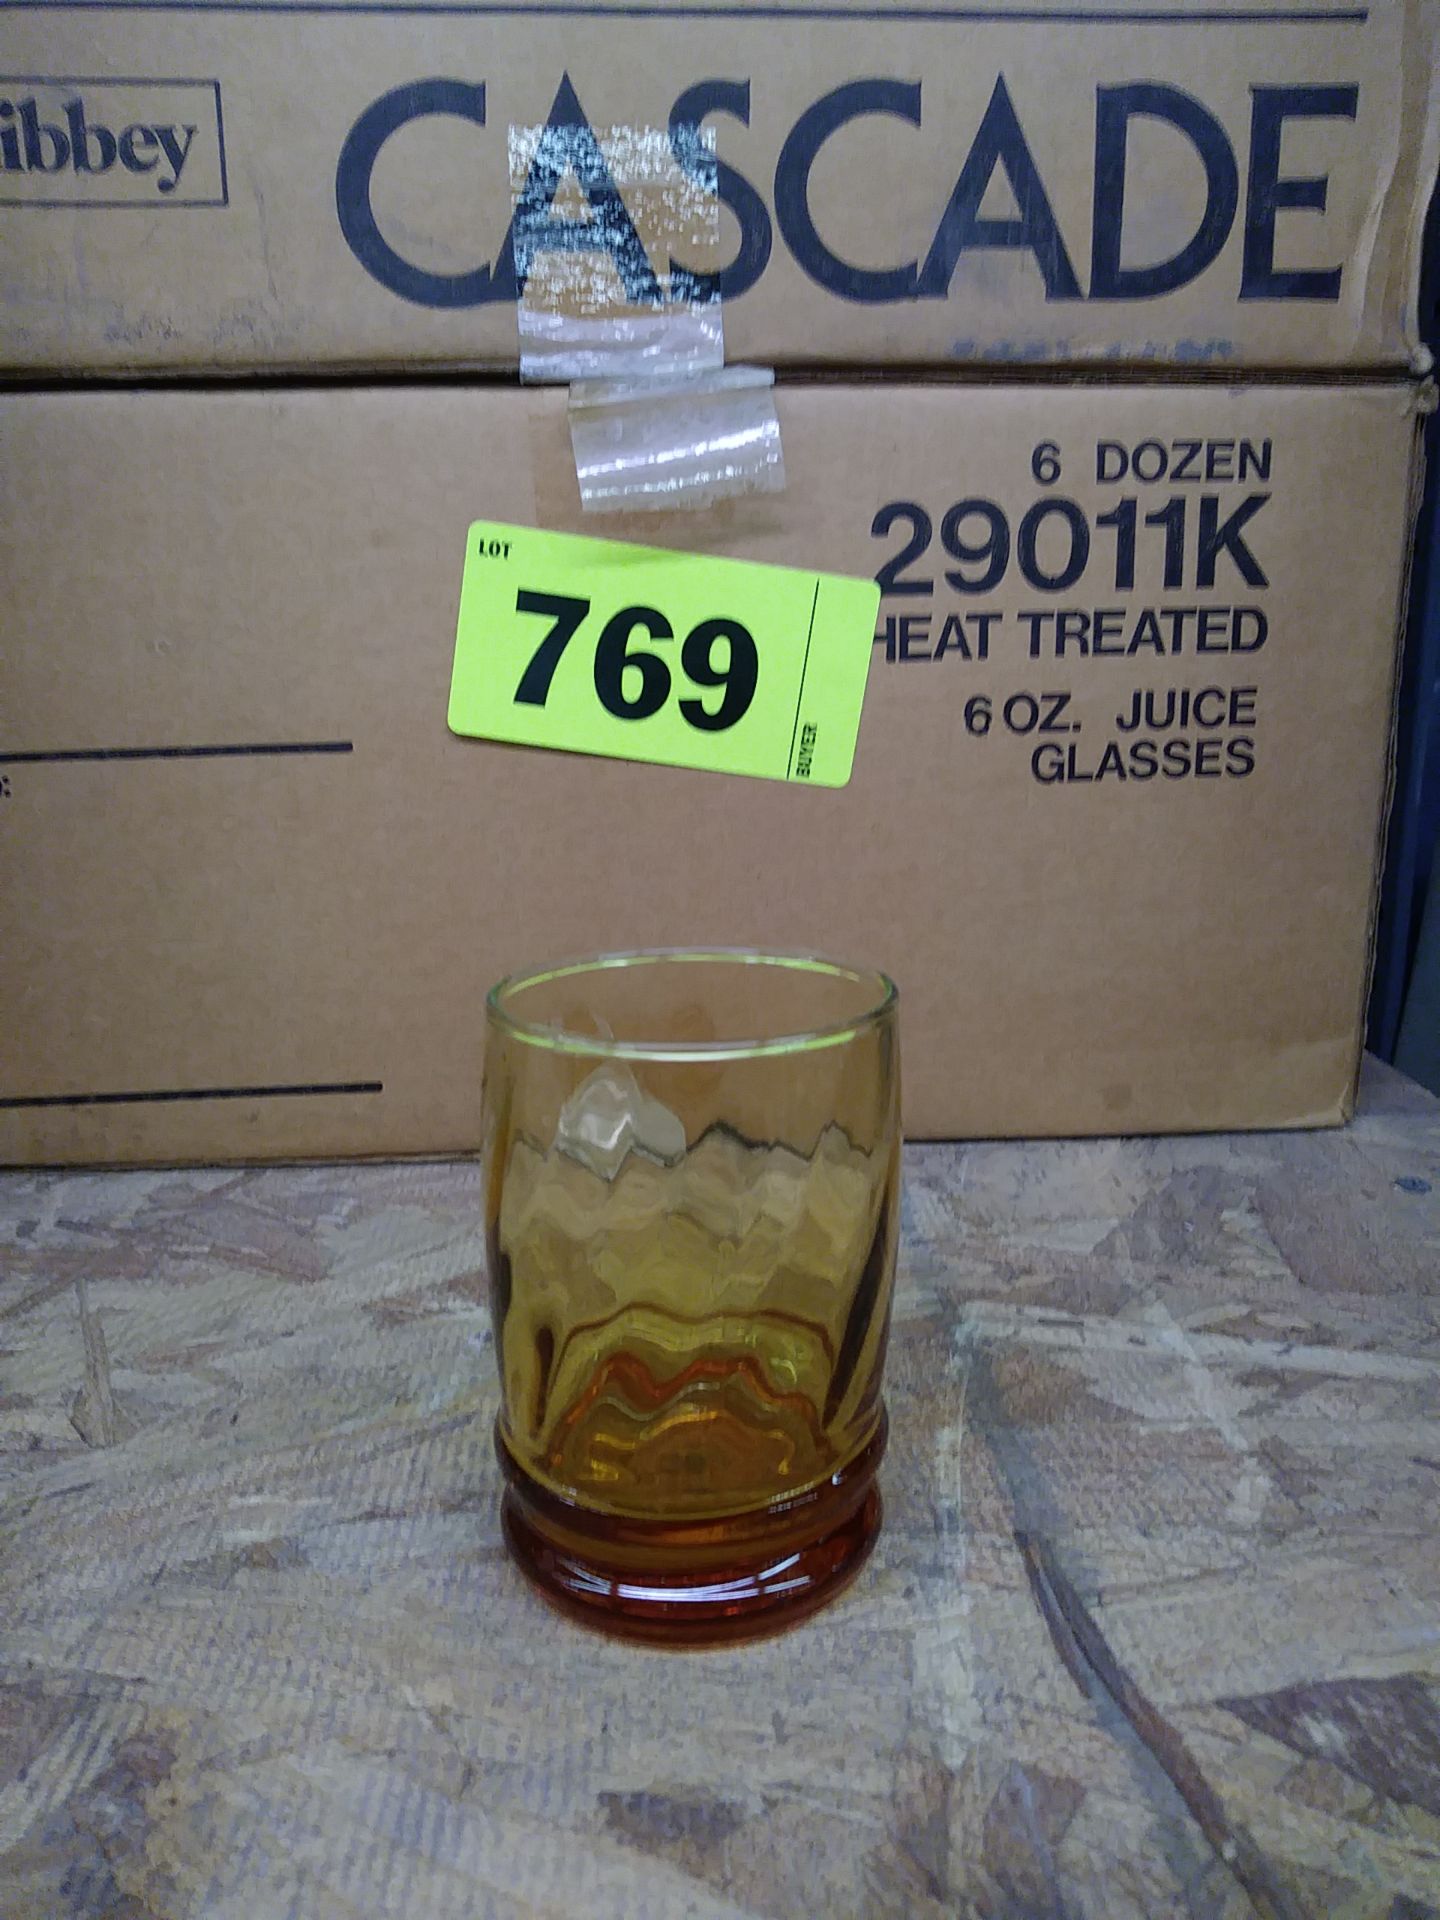 NEW LIBBEY GOLD CASCADE (2901K) HEAT TREATED 6OZ JUICE GLASS (INCLUDES QTY: 720)